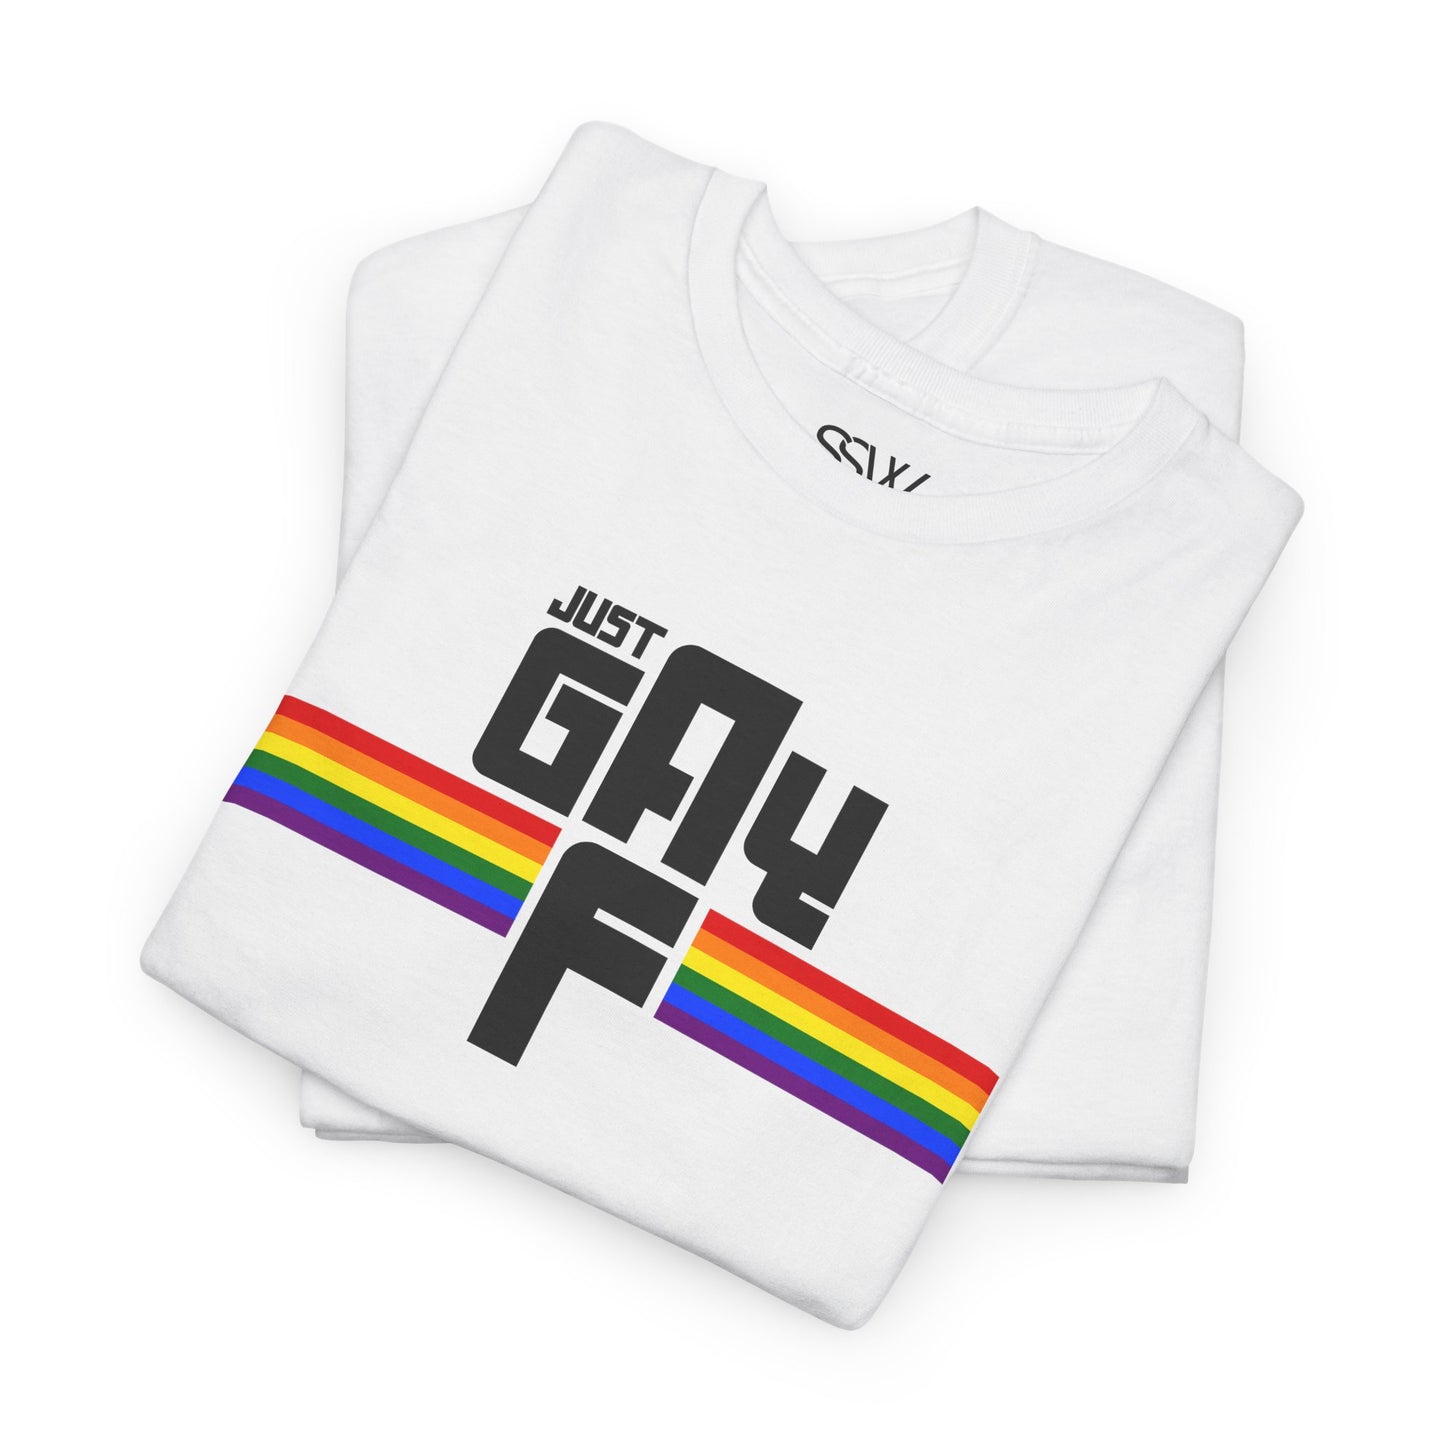 Just Pride Tee Shirt